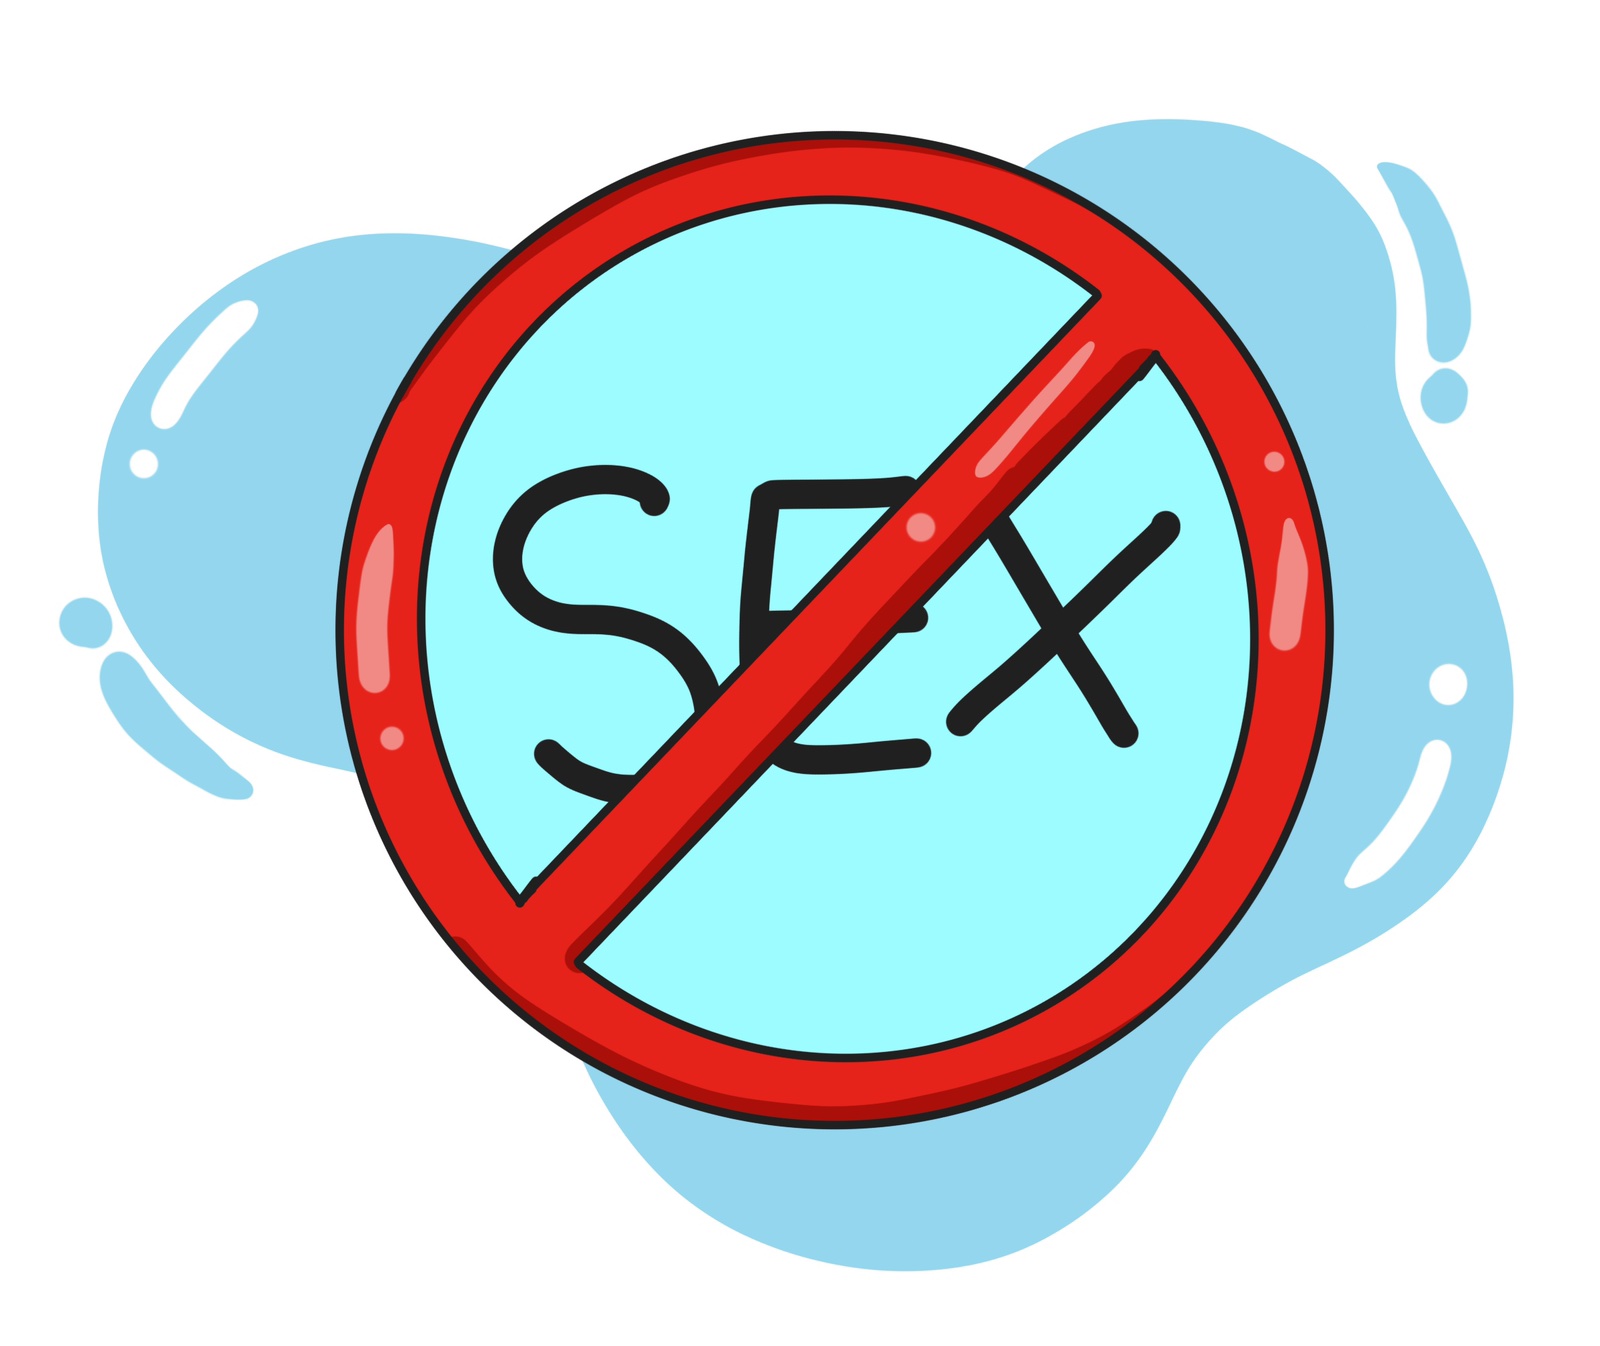 Say no to SEX